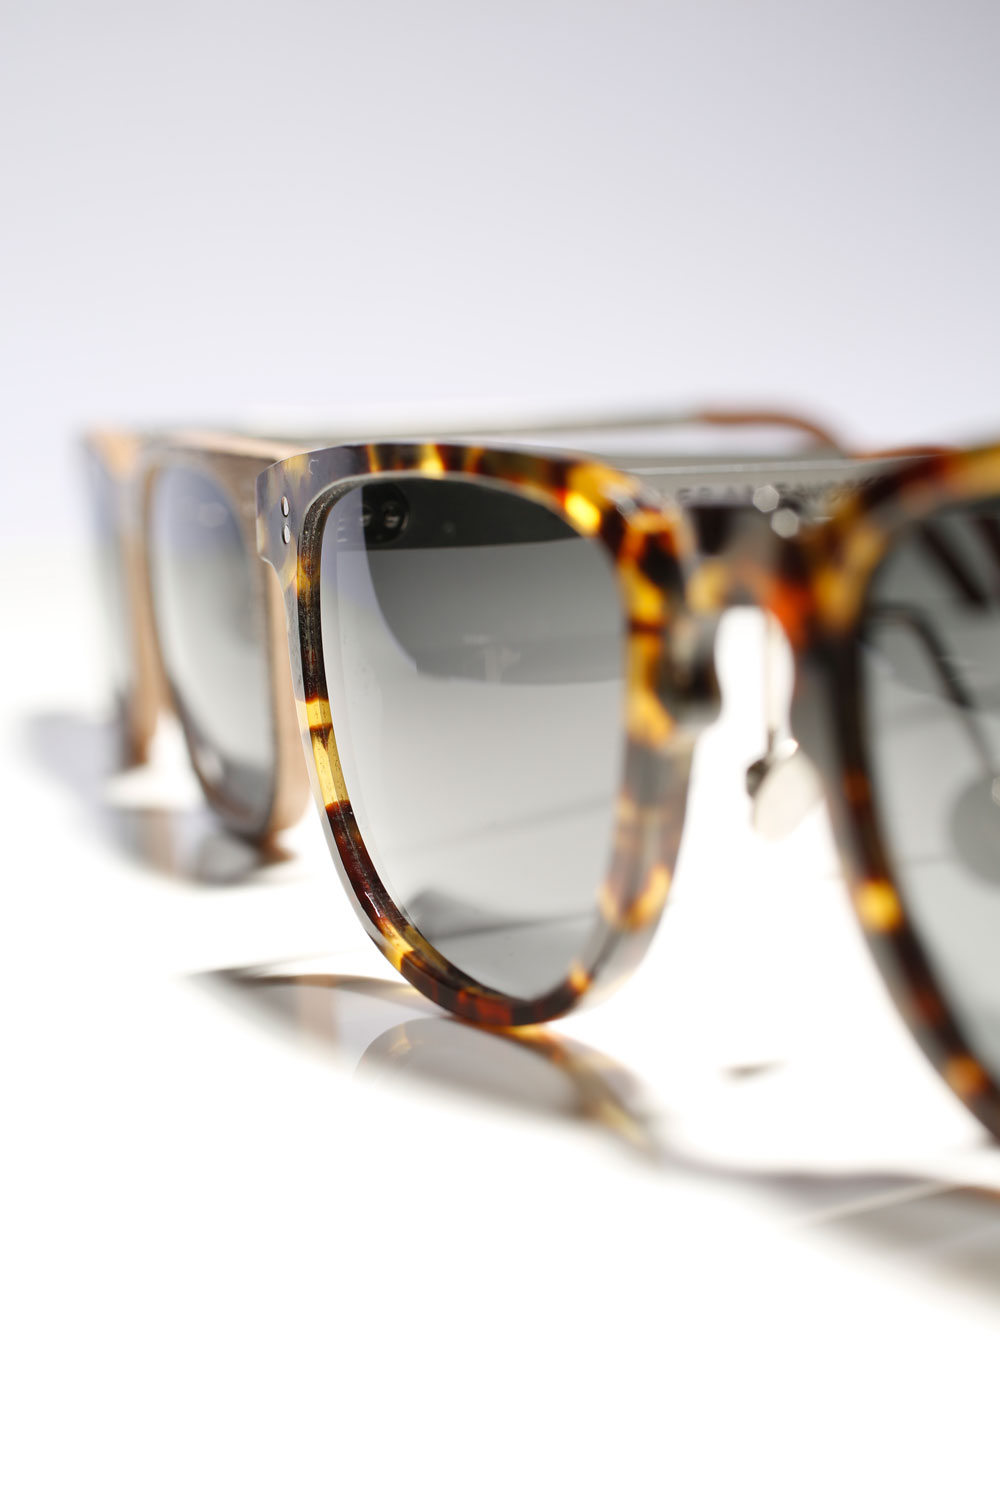 Kickstarter Campaign: Create Your Own Eyewear With Banton Frameworks